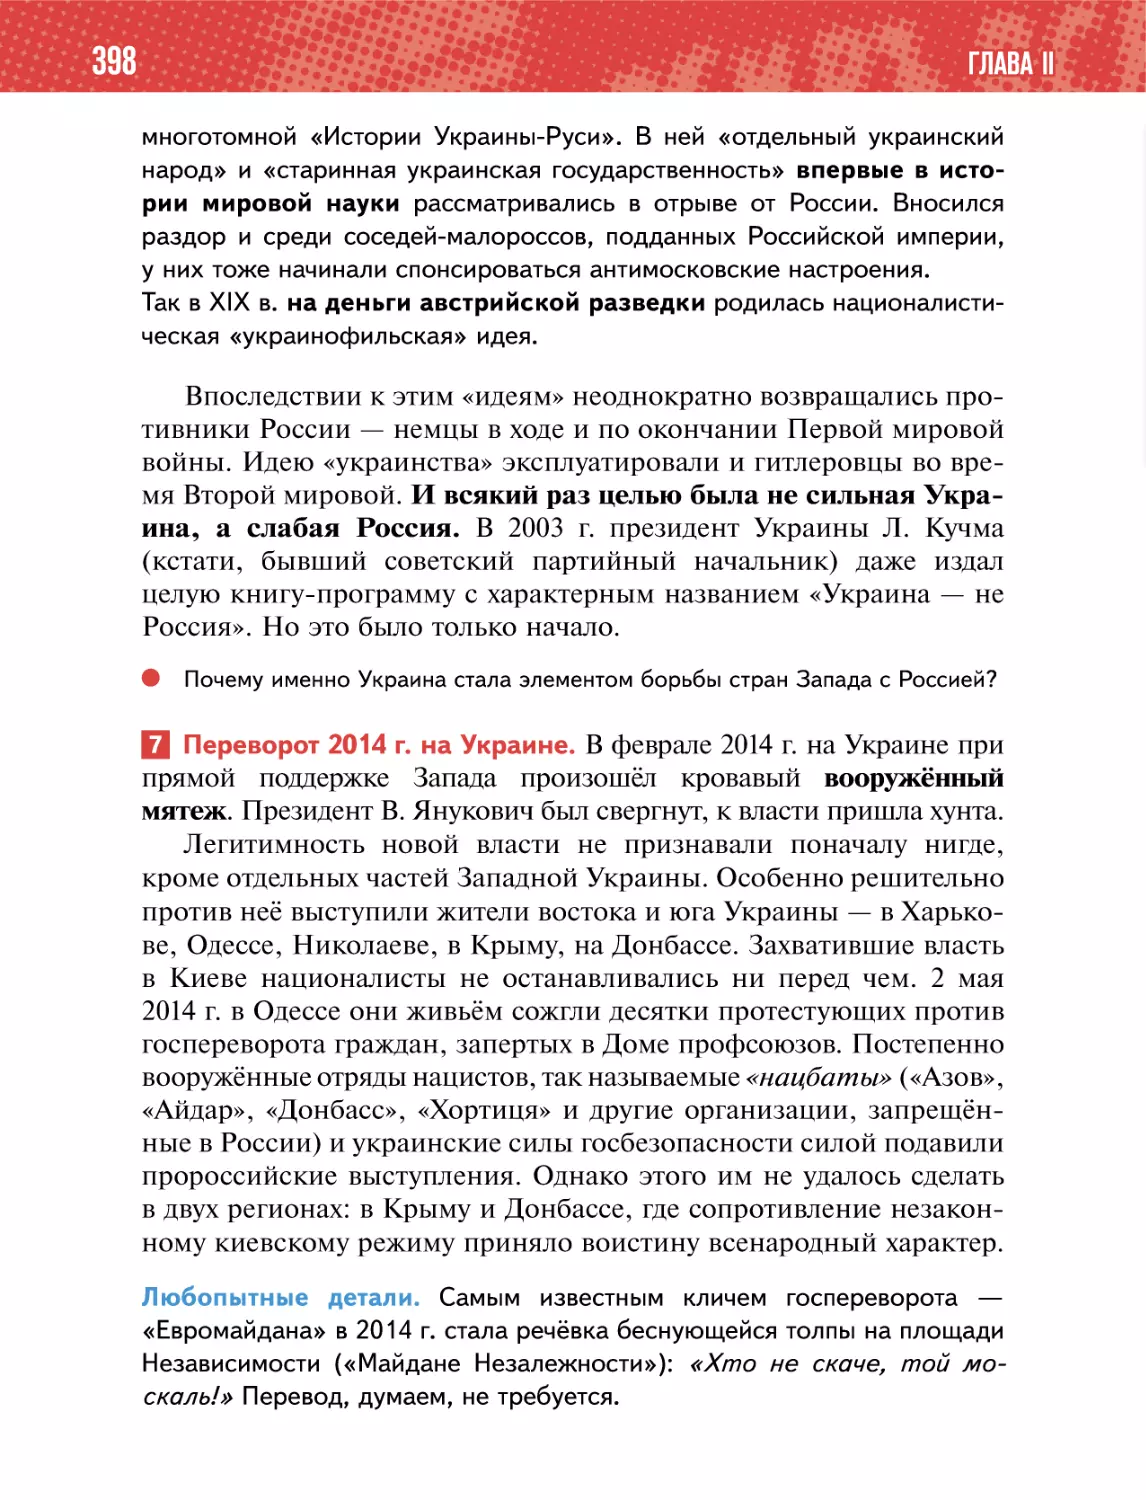 7 Переворот 2014 г. на Украине.